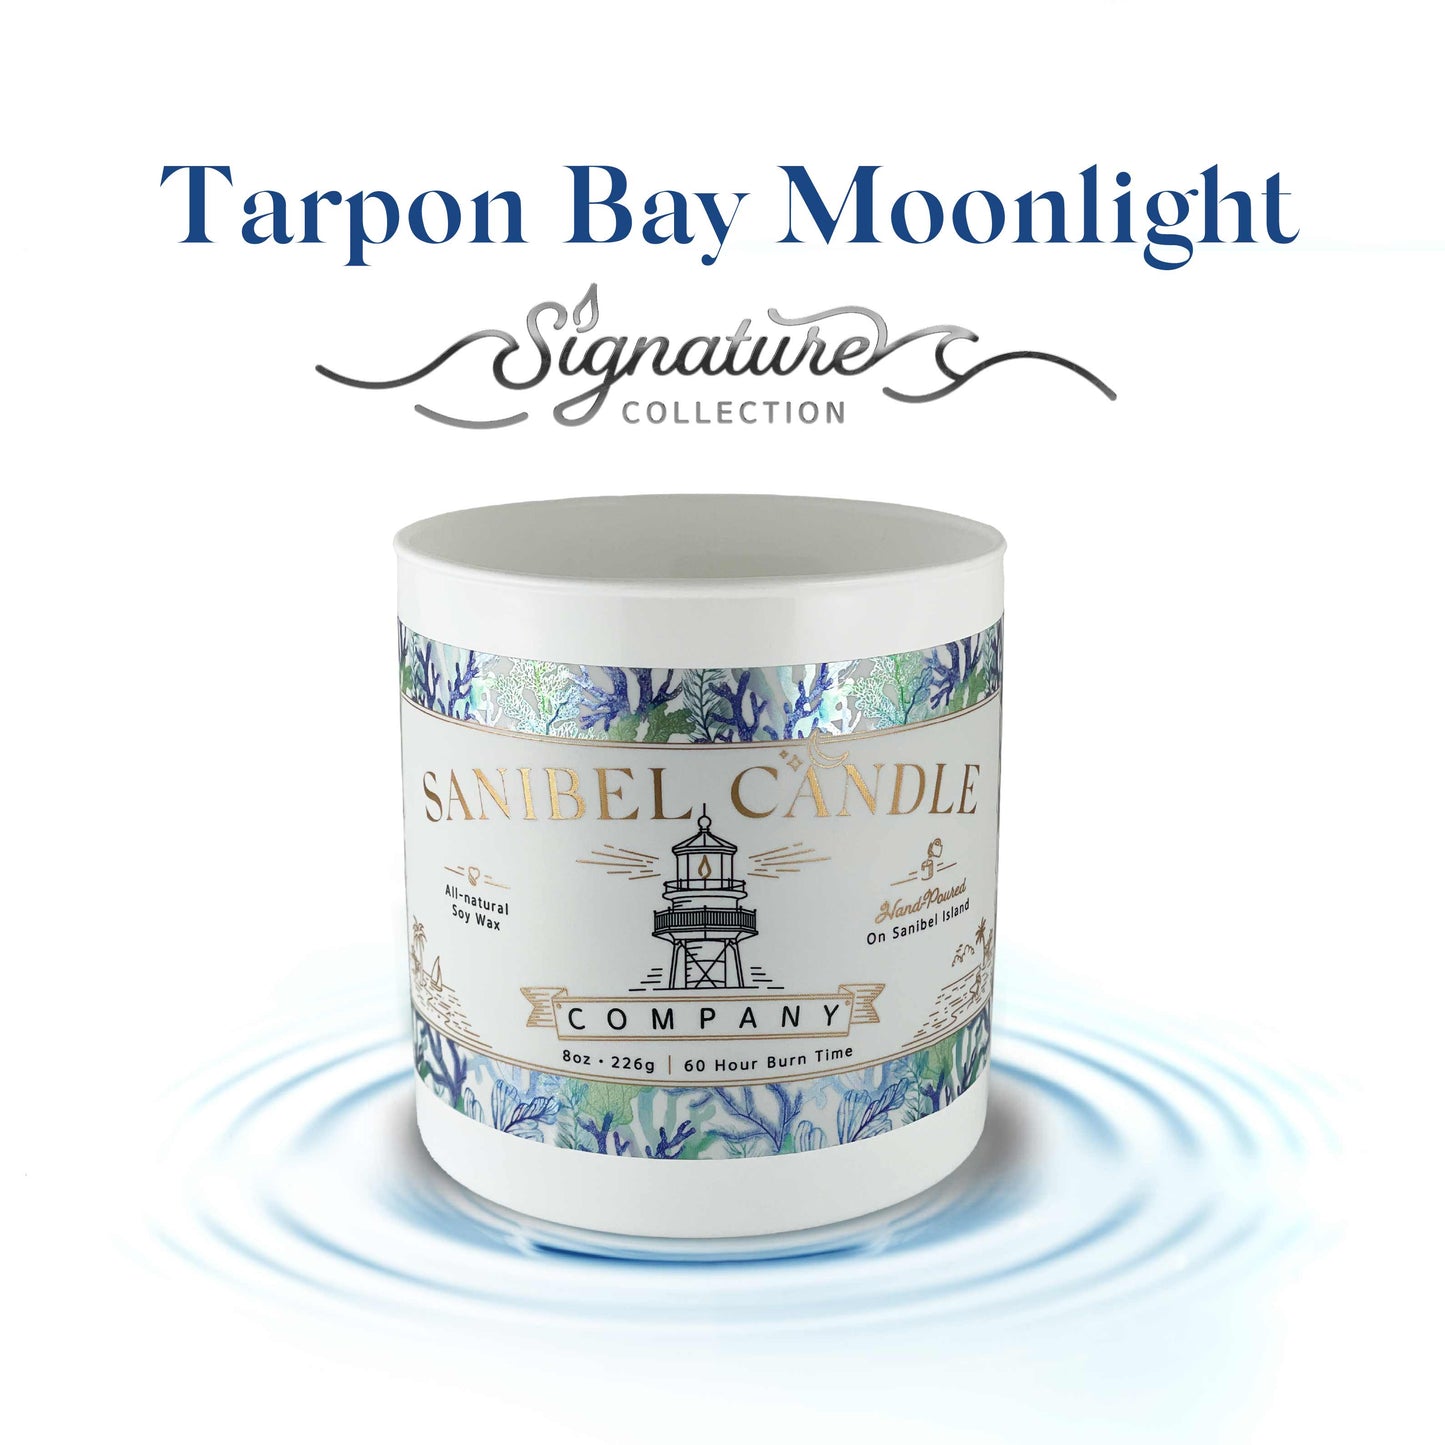 Tarpon Bay Moonlight - Signature Candle - 8 oz